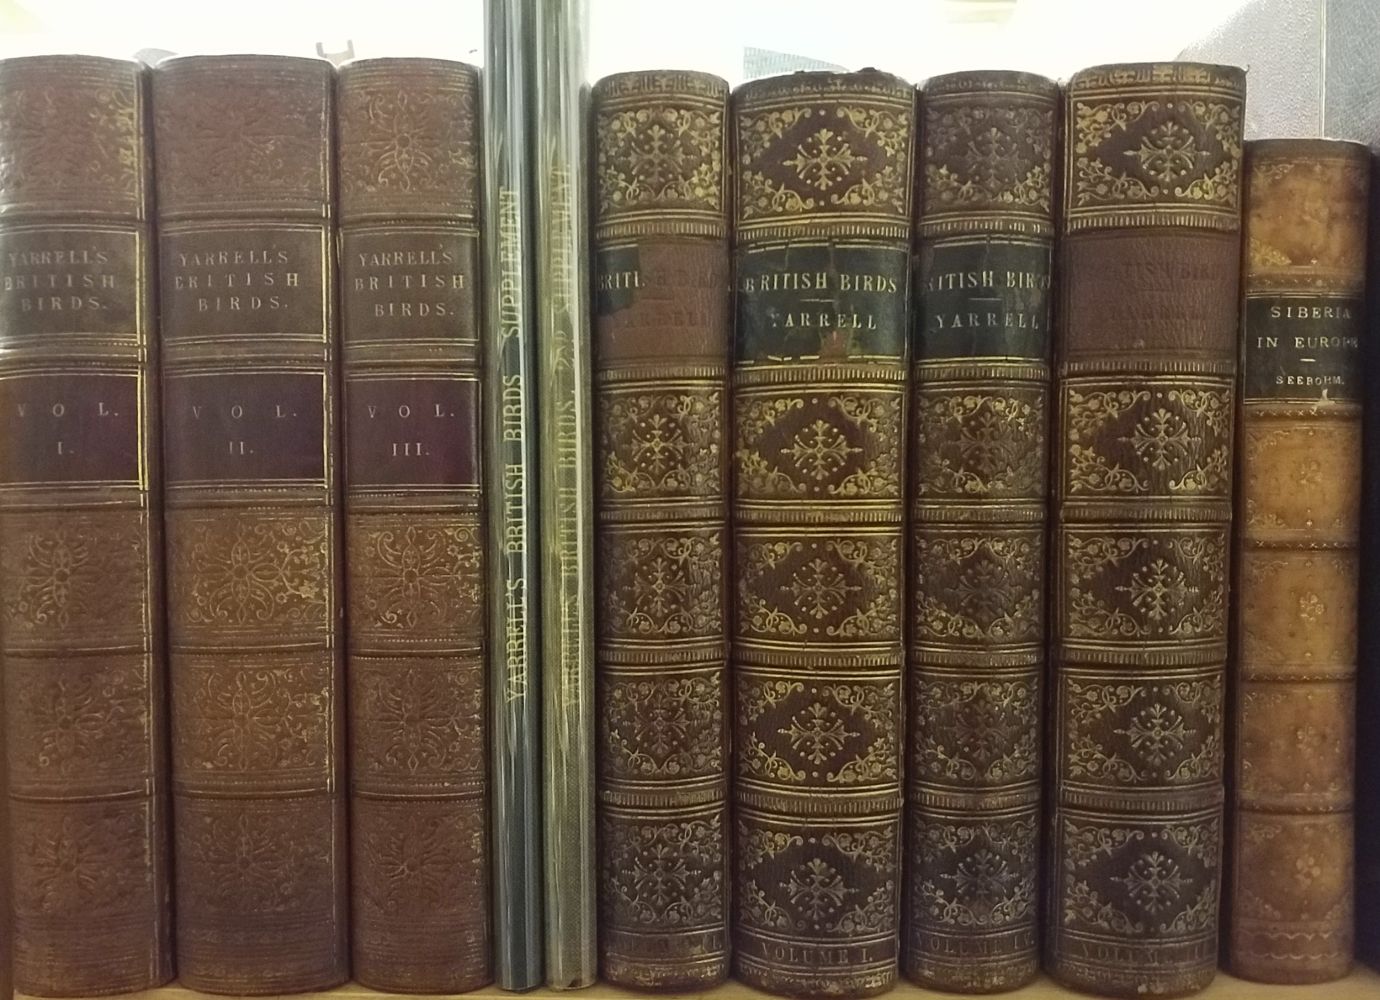 Yarrell (William). A History of British Birds, 3 volumes, London: John Van Voorst, 1843